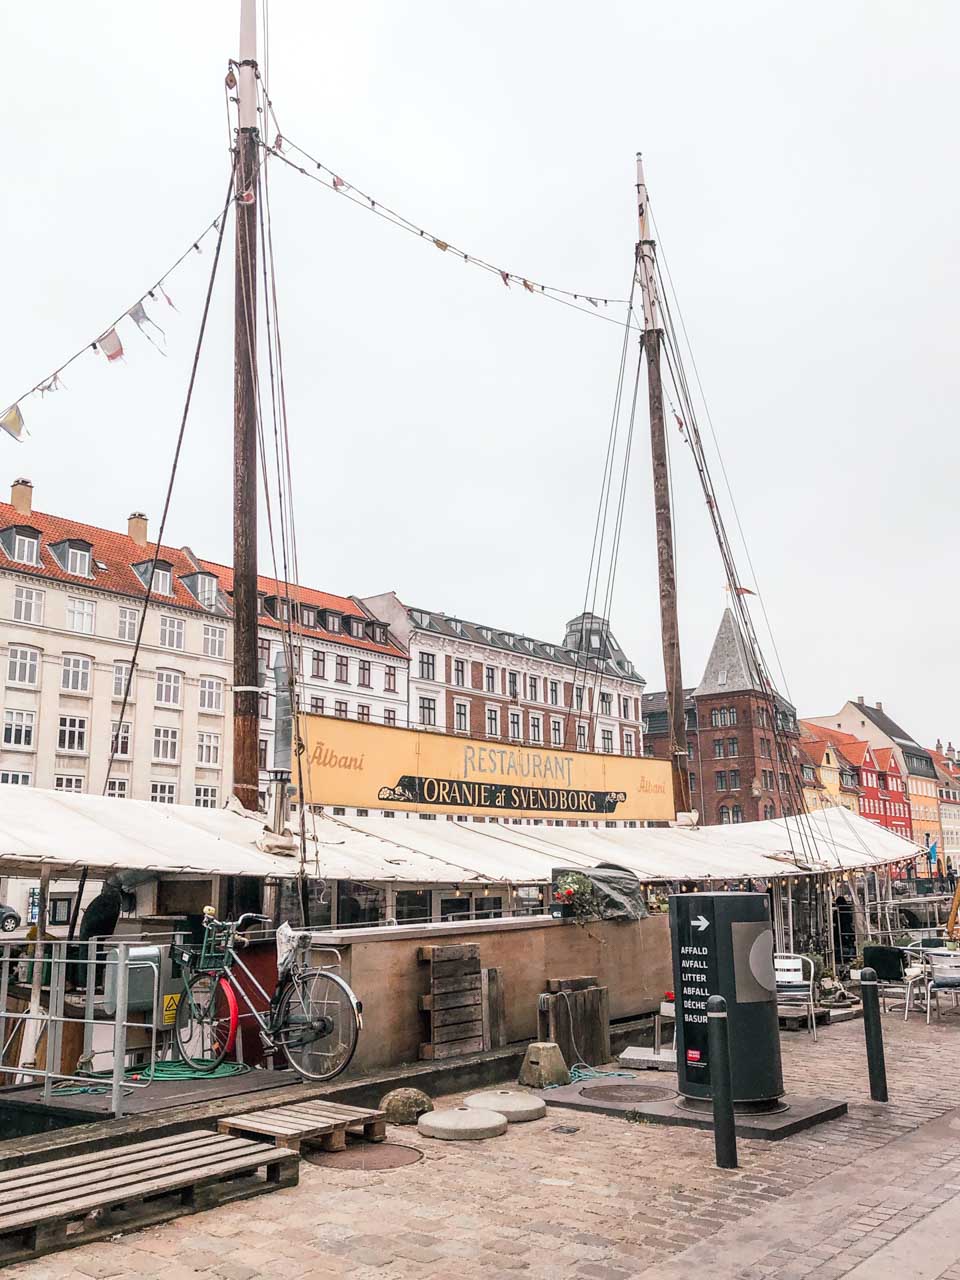 A restaurant on a boat docked in Nyhavn harbour in Copenhagen, Denmark